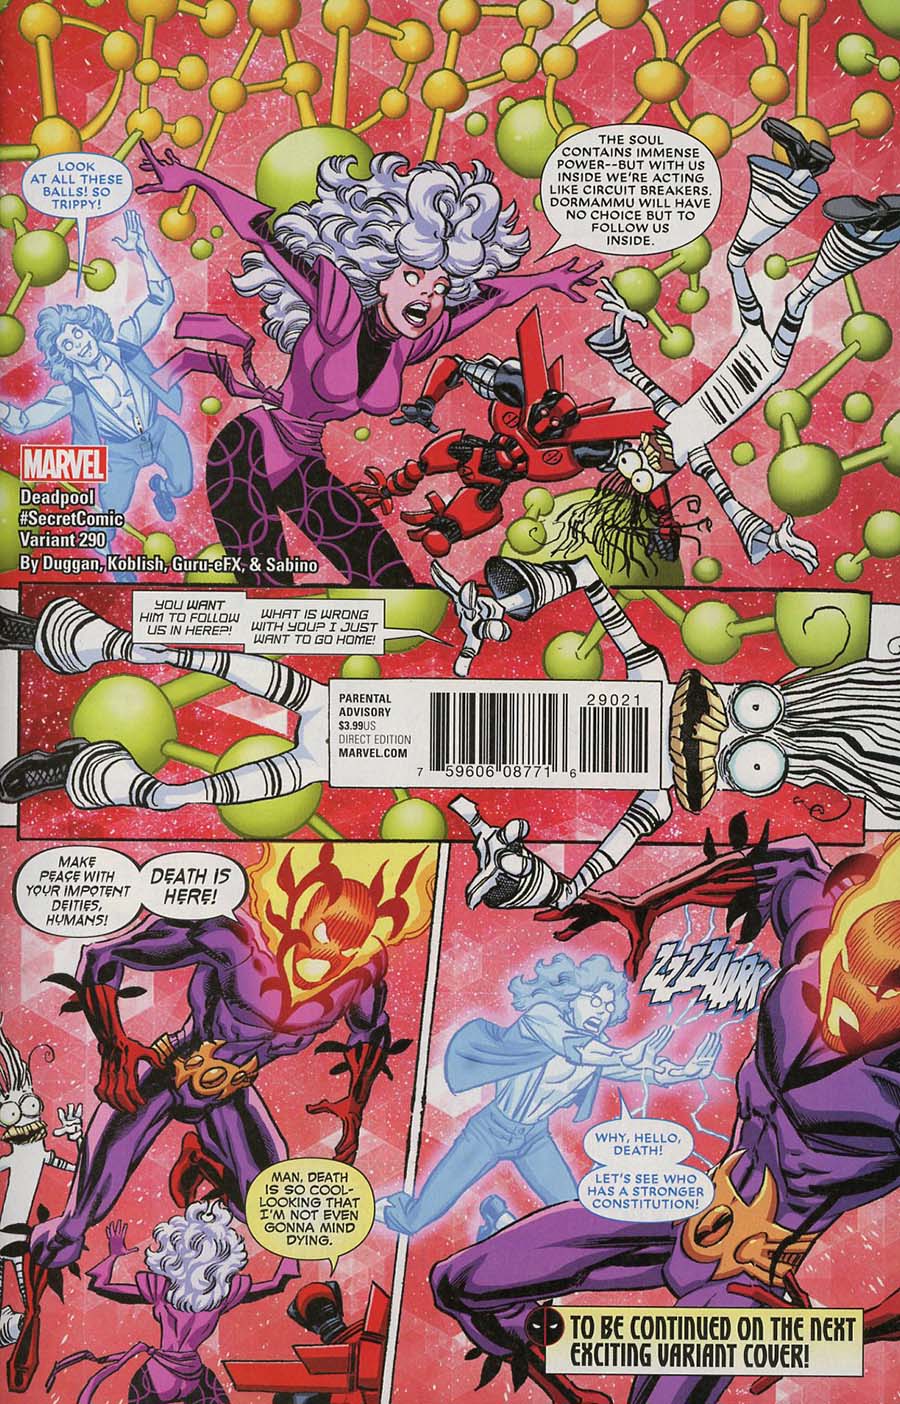 Despicable Deadpool #290 Cover C Variant Scott Koblish Secret Comics Cover (Marvel Legacy Tie-In)